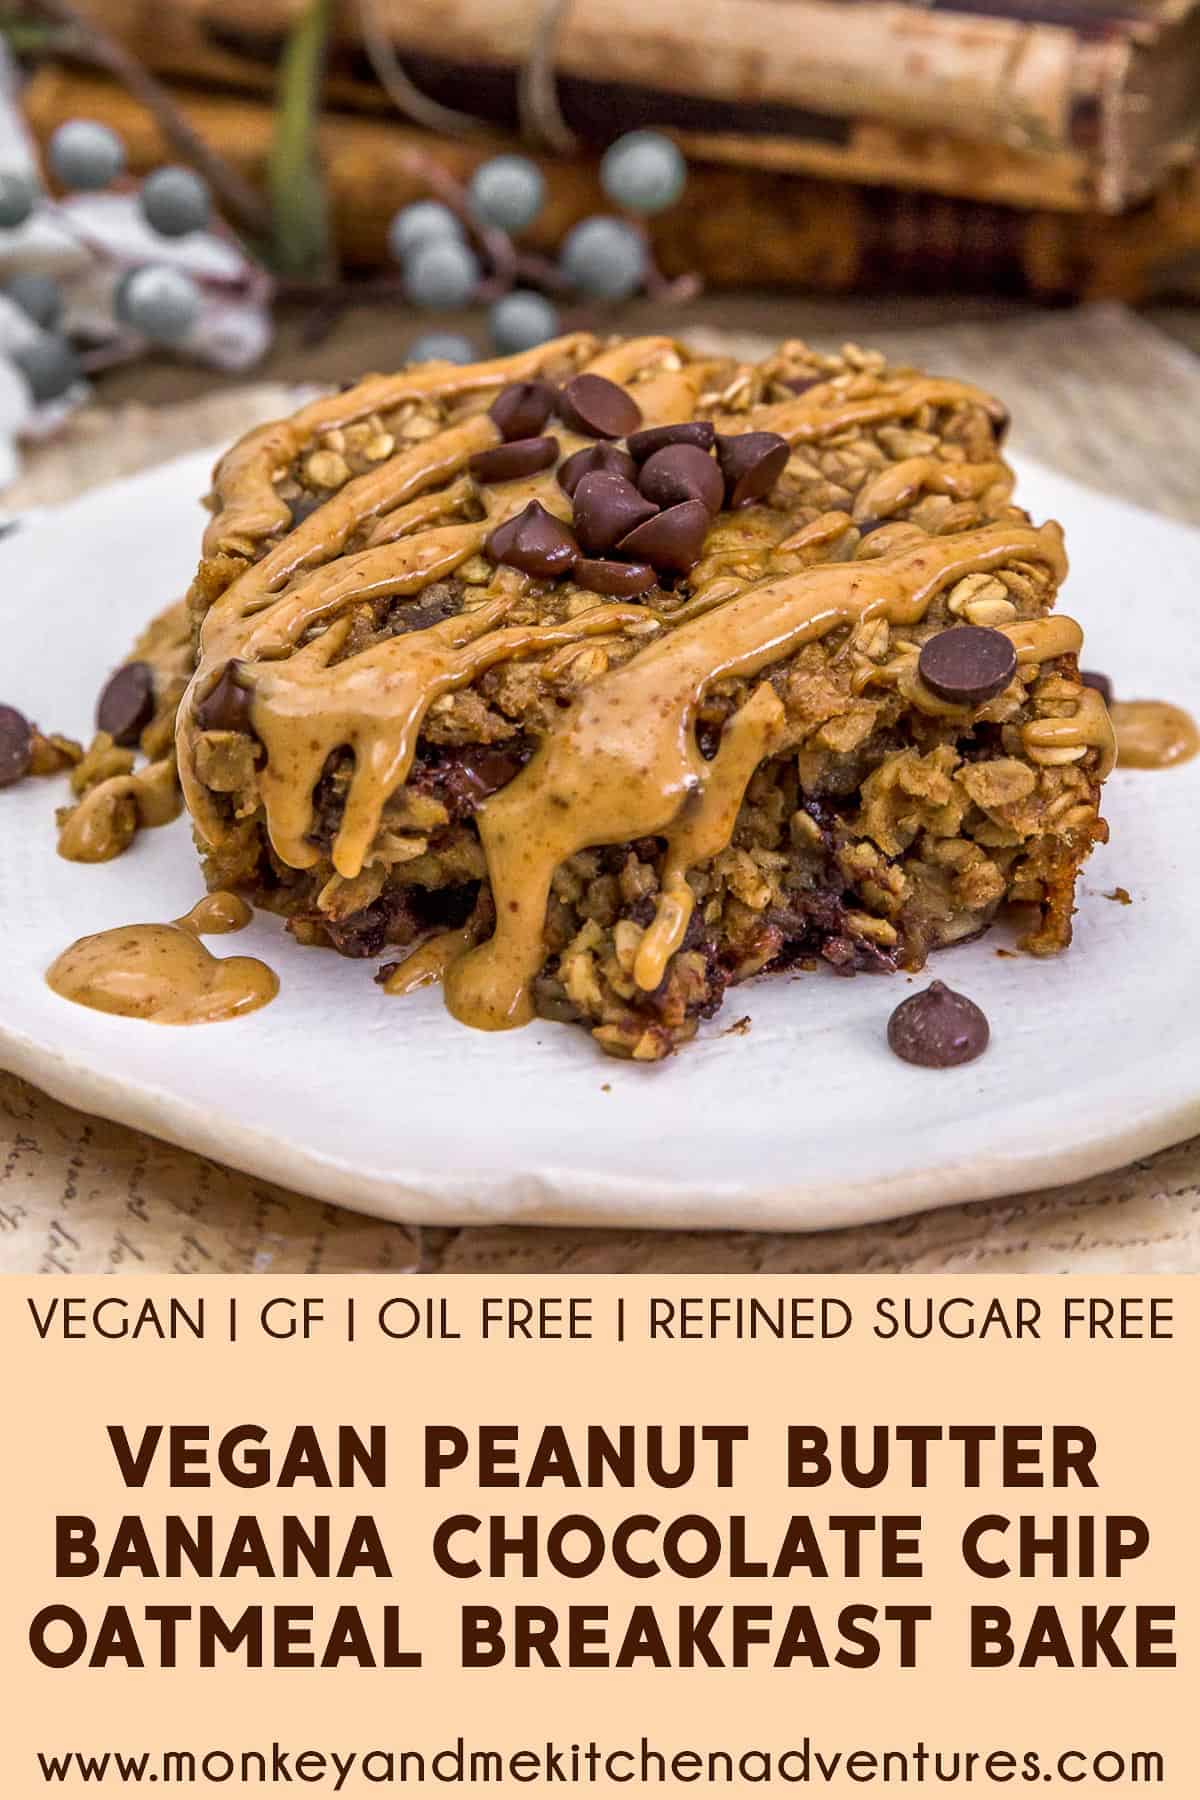 Vegan Peanut Butter Banana Chocolate Chip Oatmeal Breakfast Bake with text description